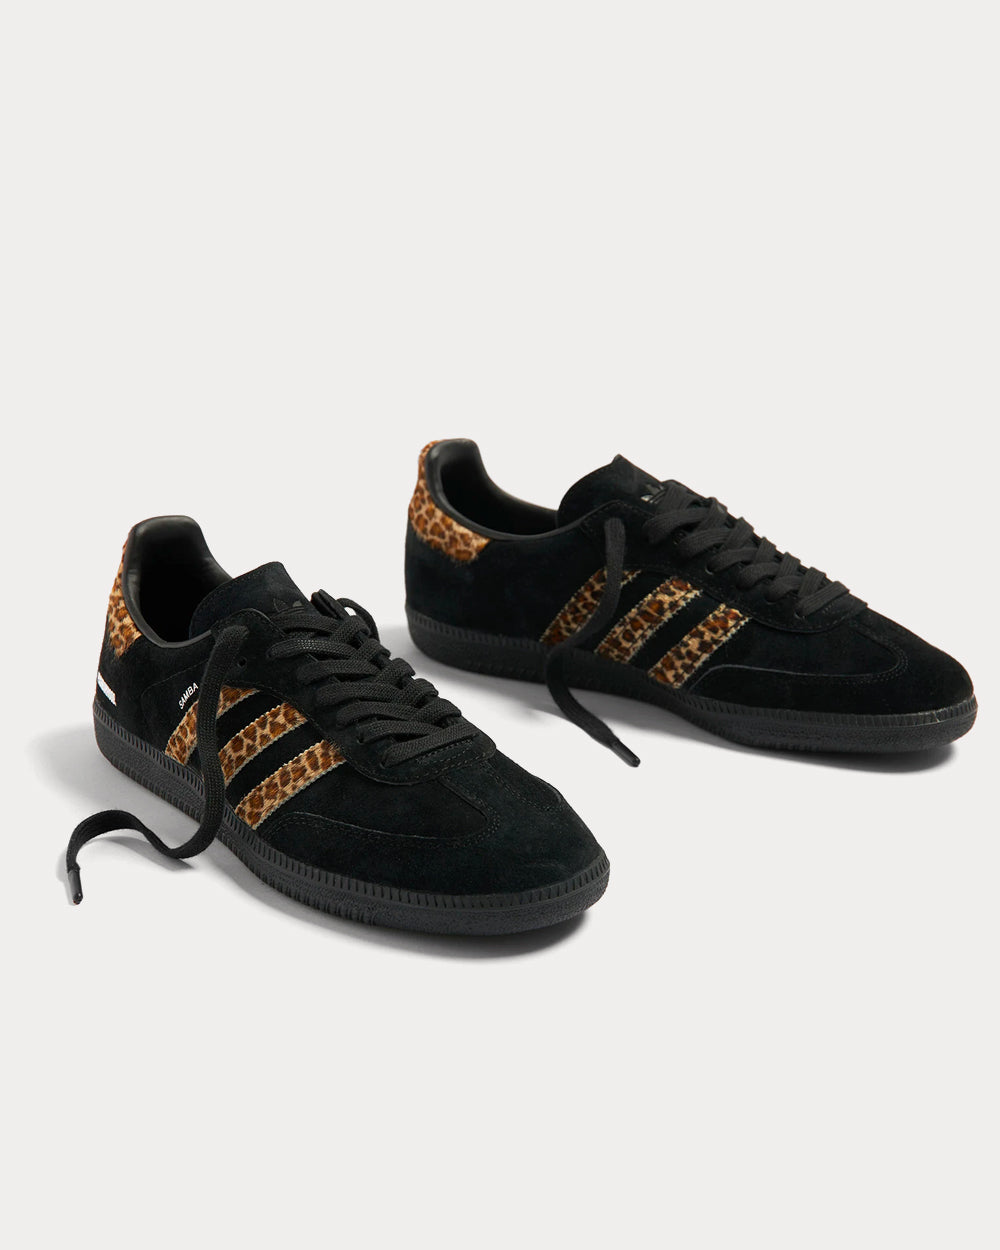 Adidas x END - X Neighborhood Samba Black & Leopard Low Top Sneakers